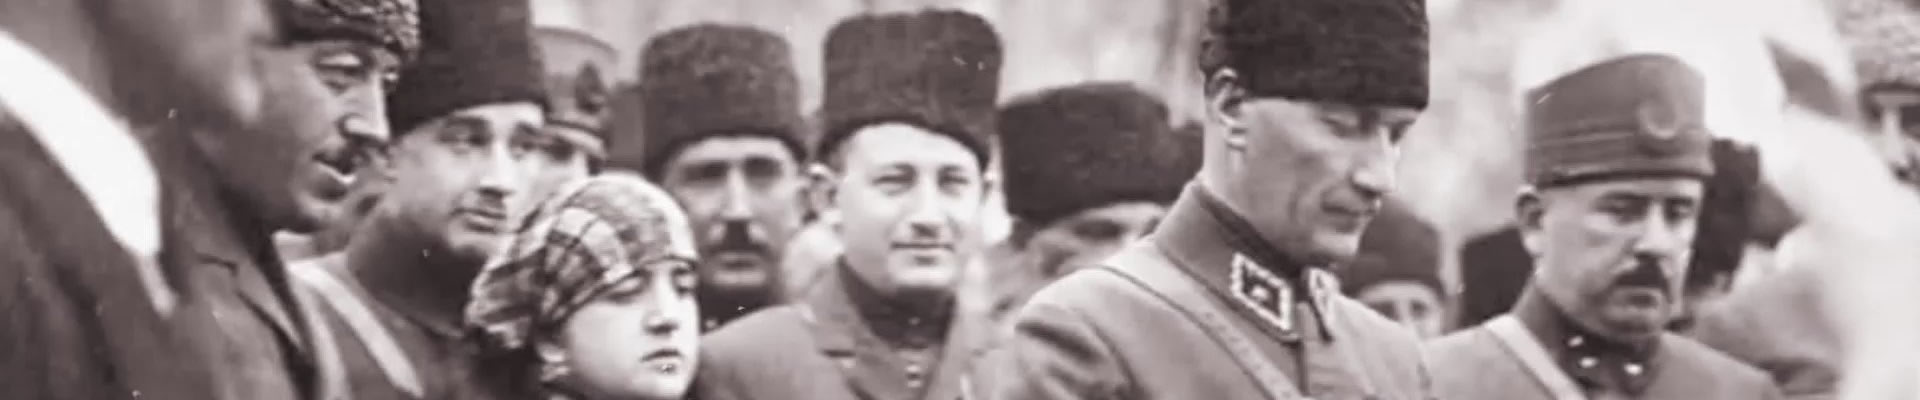 İstoriya na turtsiya Prez XX vek. (XX.Yüzyıl Türkiye Tarihi)